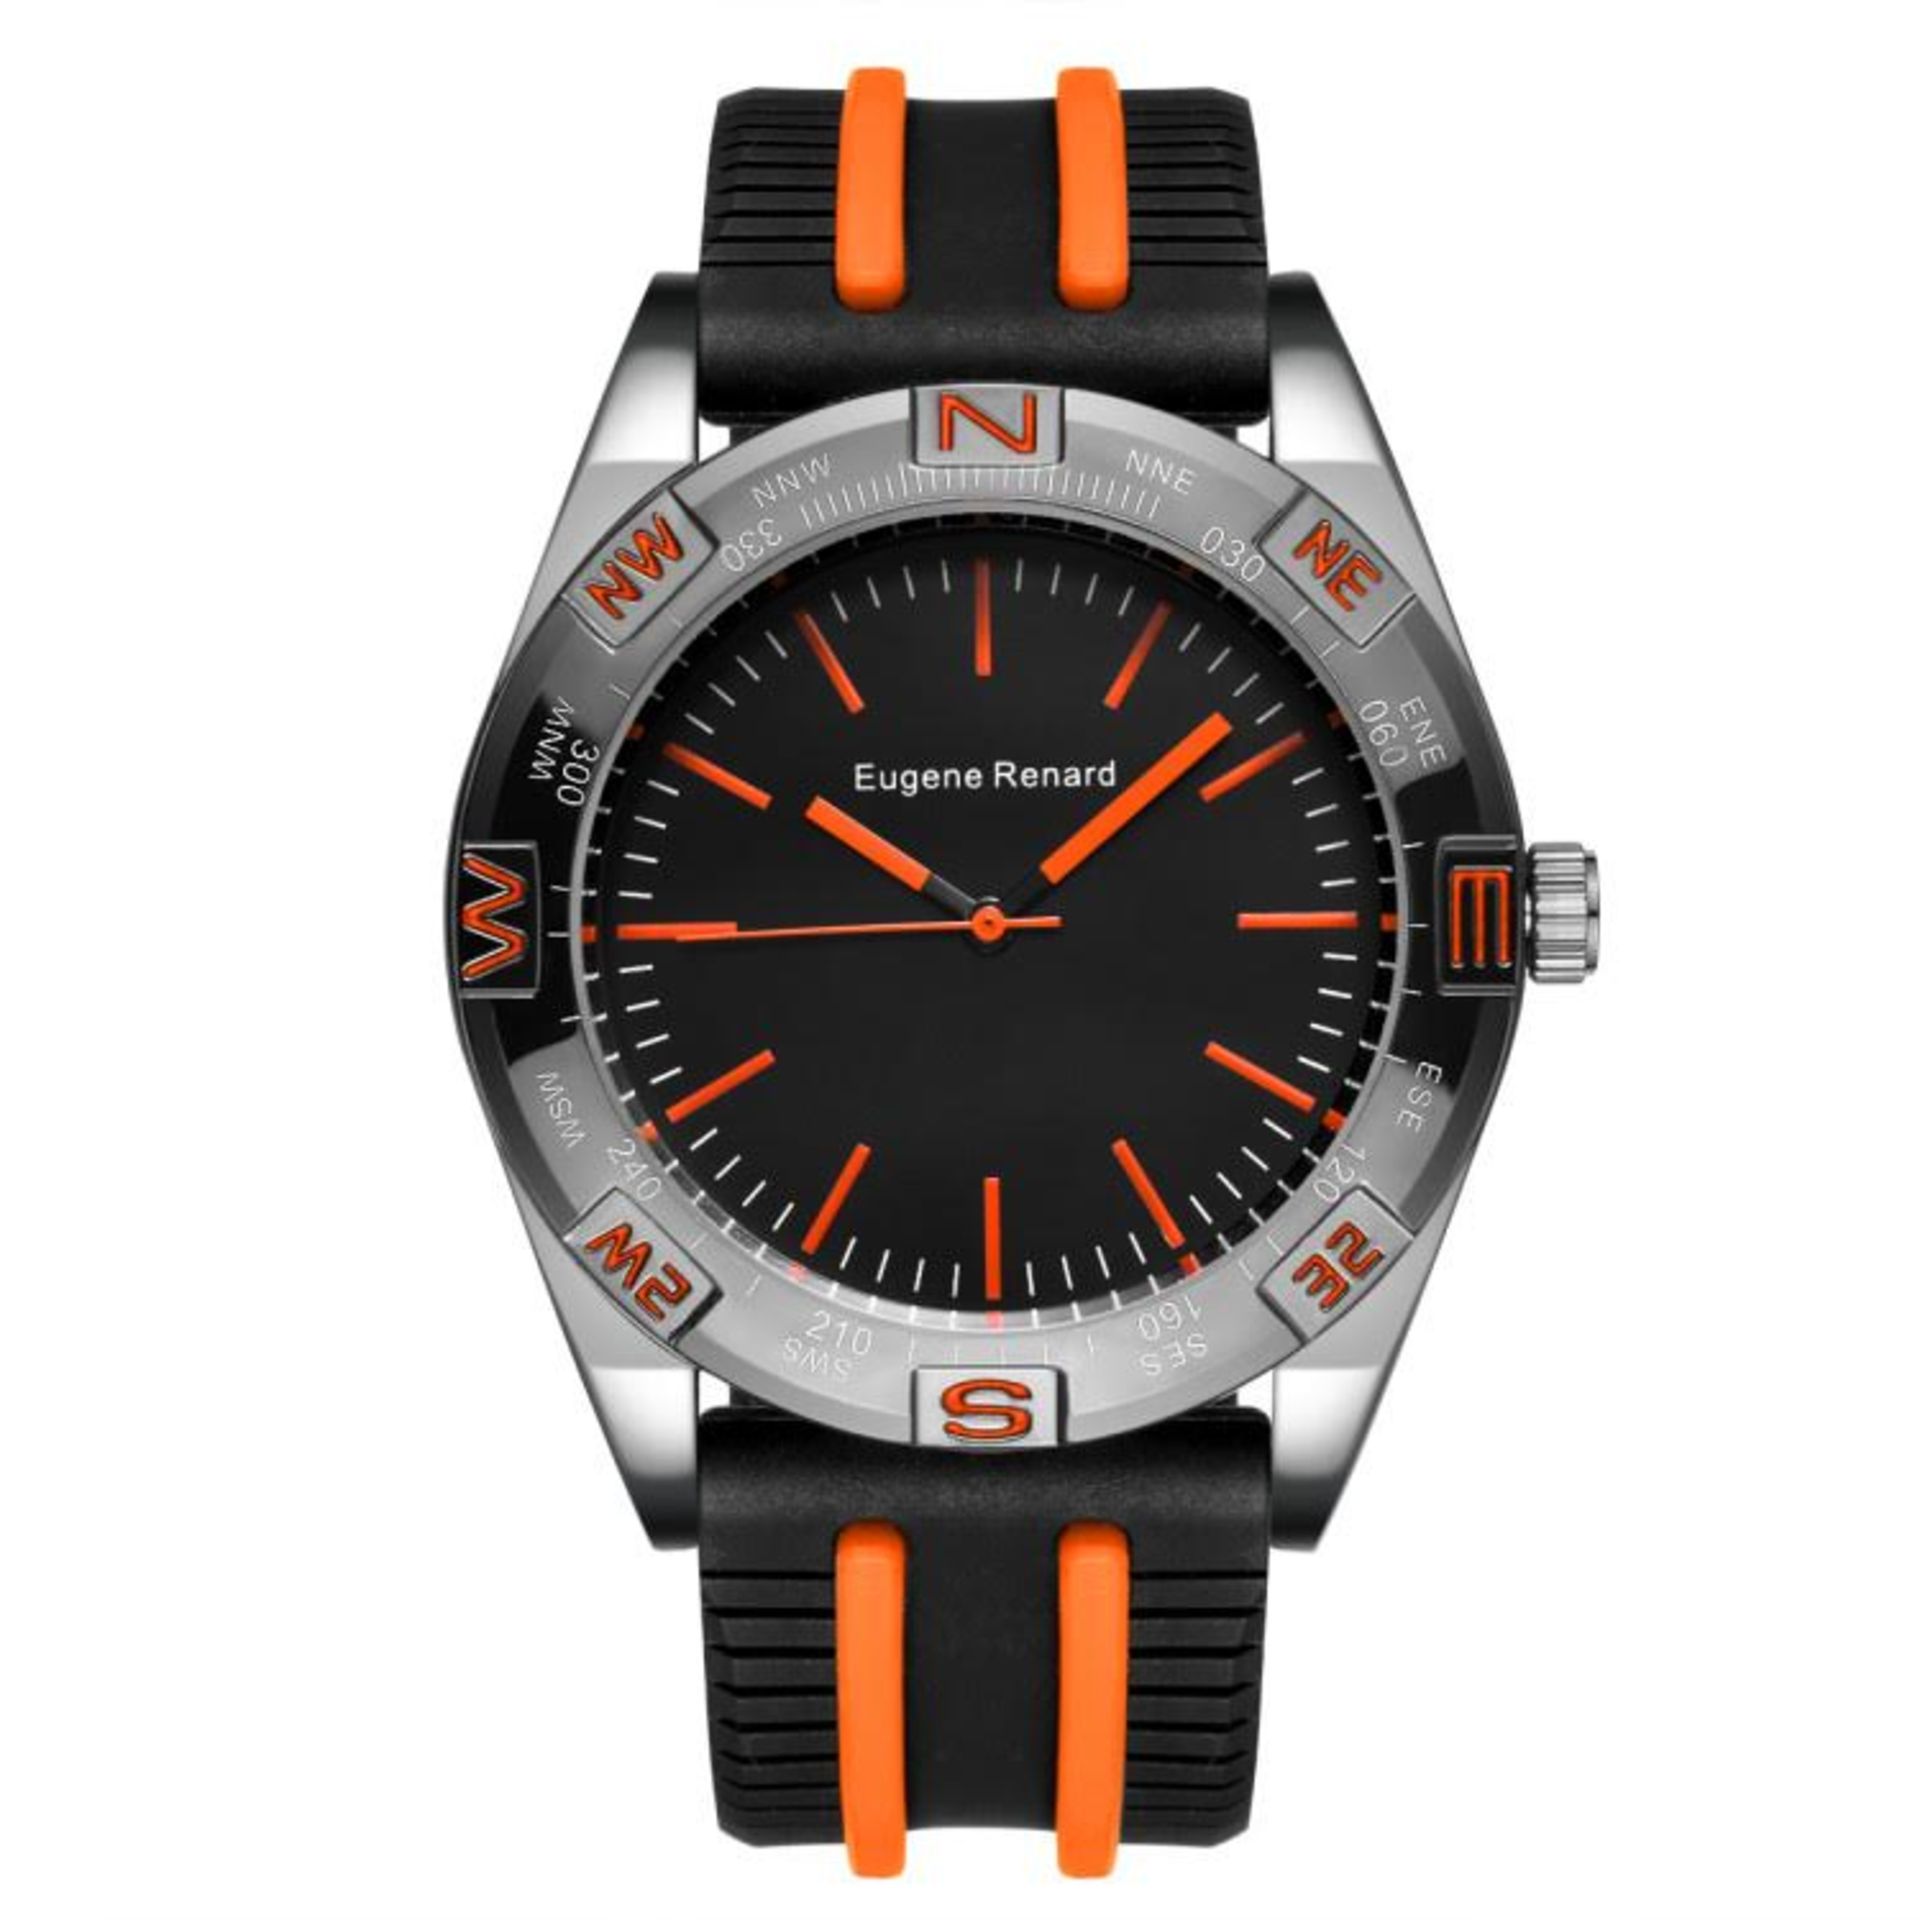 V *TRADE QTY* Brand New Gents Eugene Renard Timepiece Model X - Black Face with Orange Indices - - Image 2 of 2